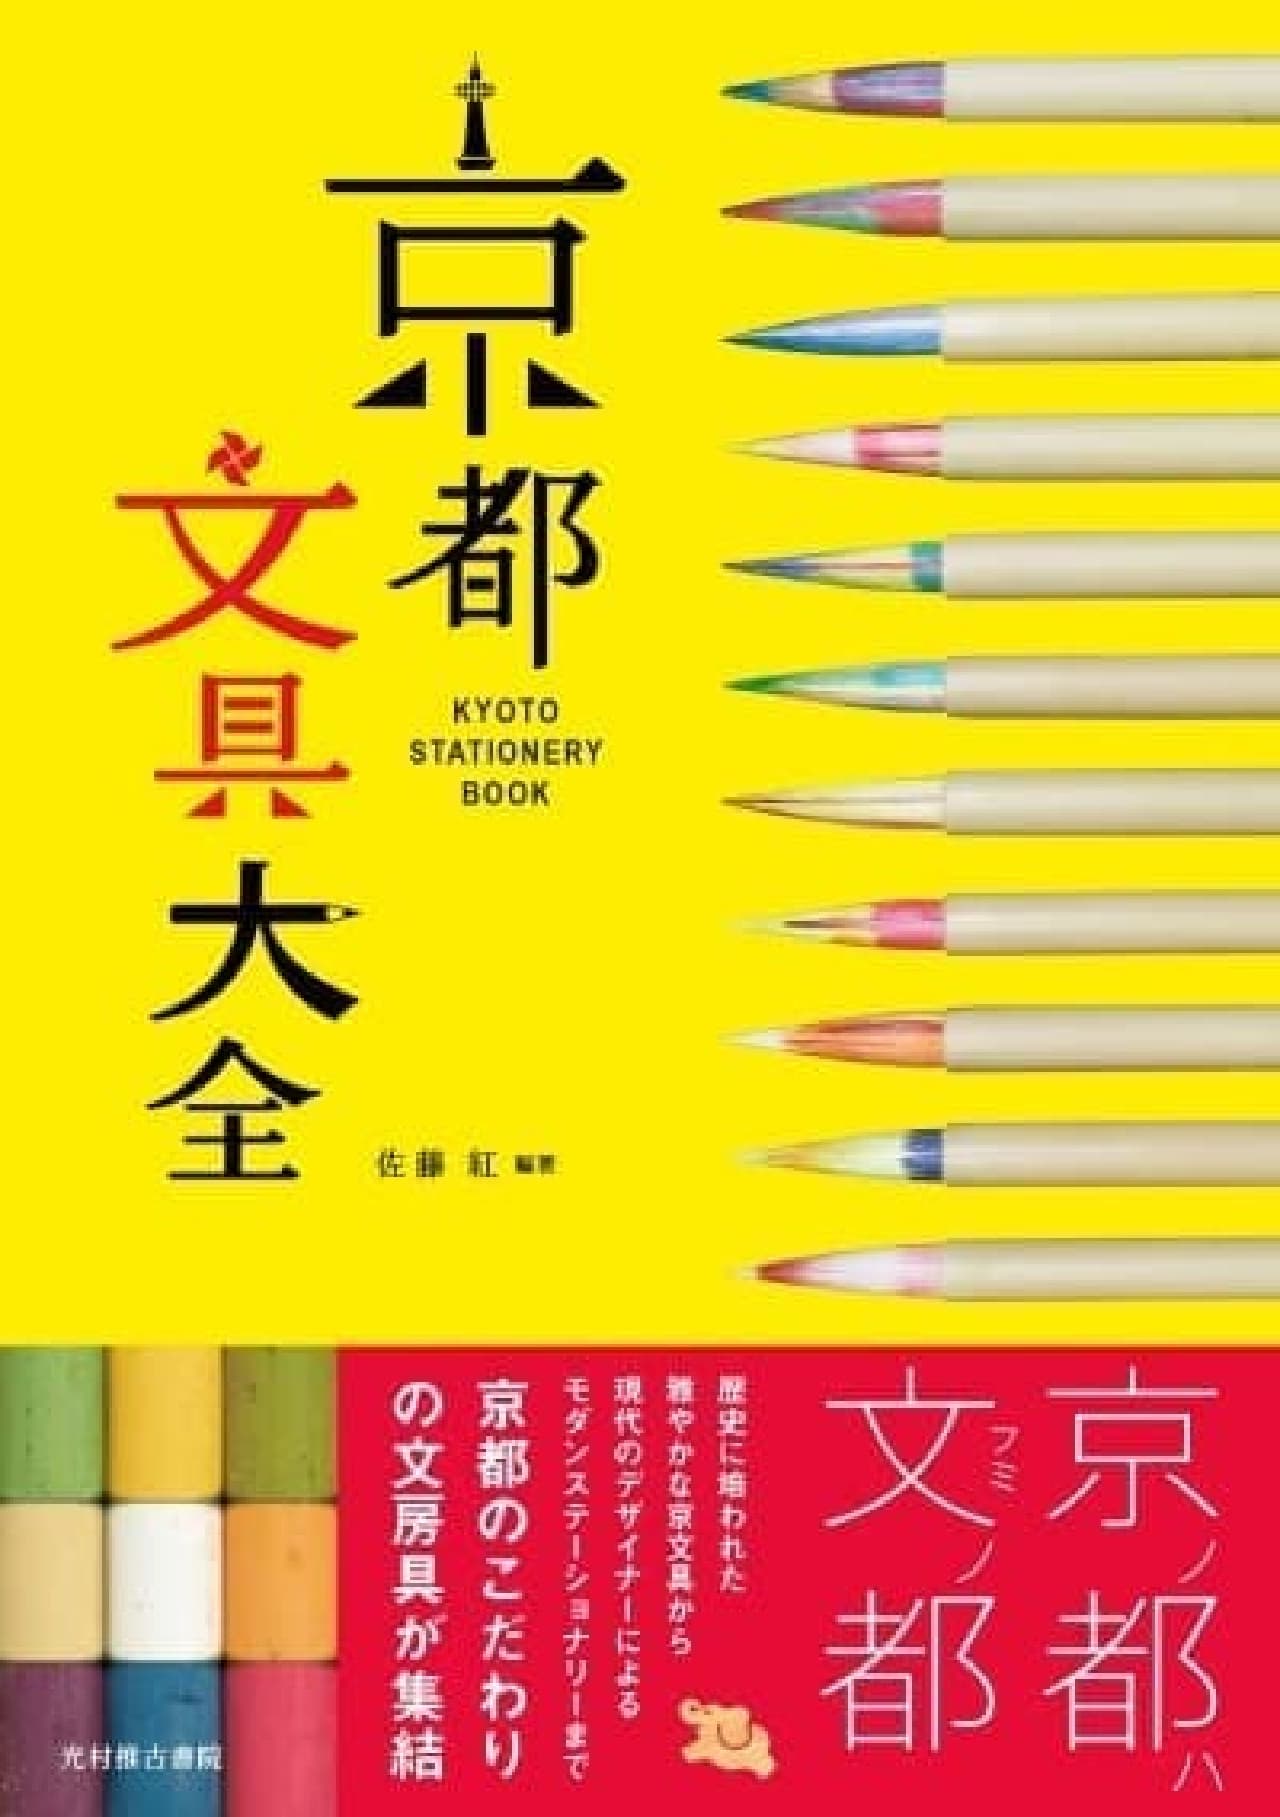 "Kyoto Stationery Encyclopedia" cover